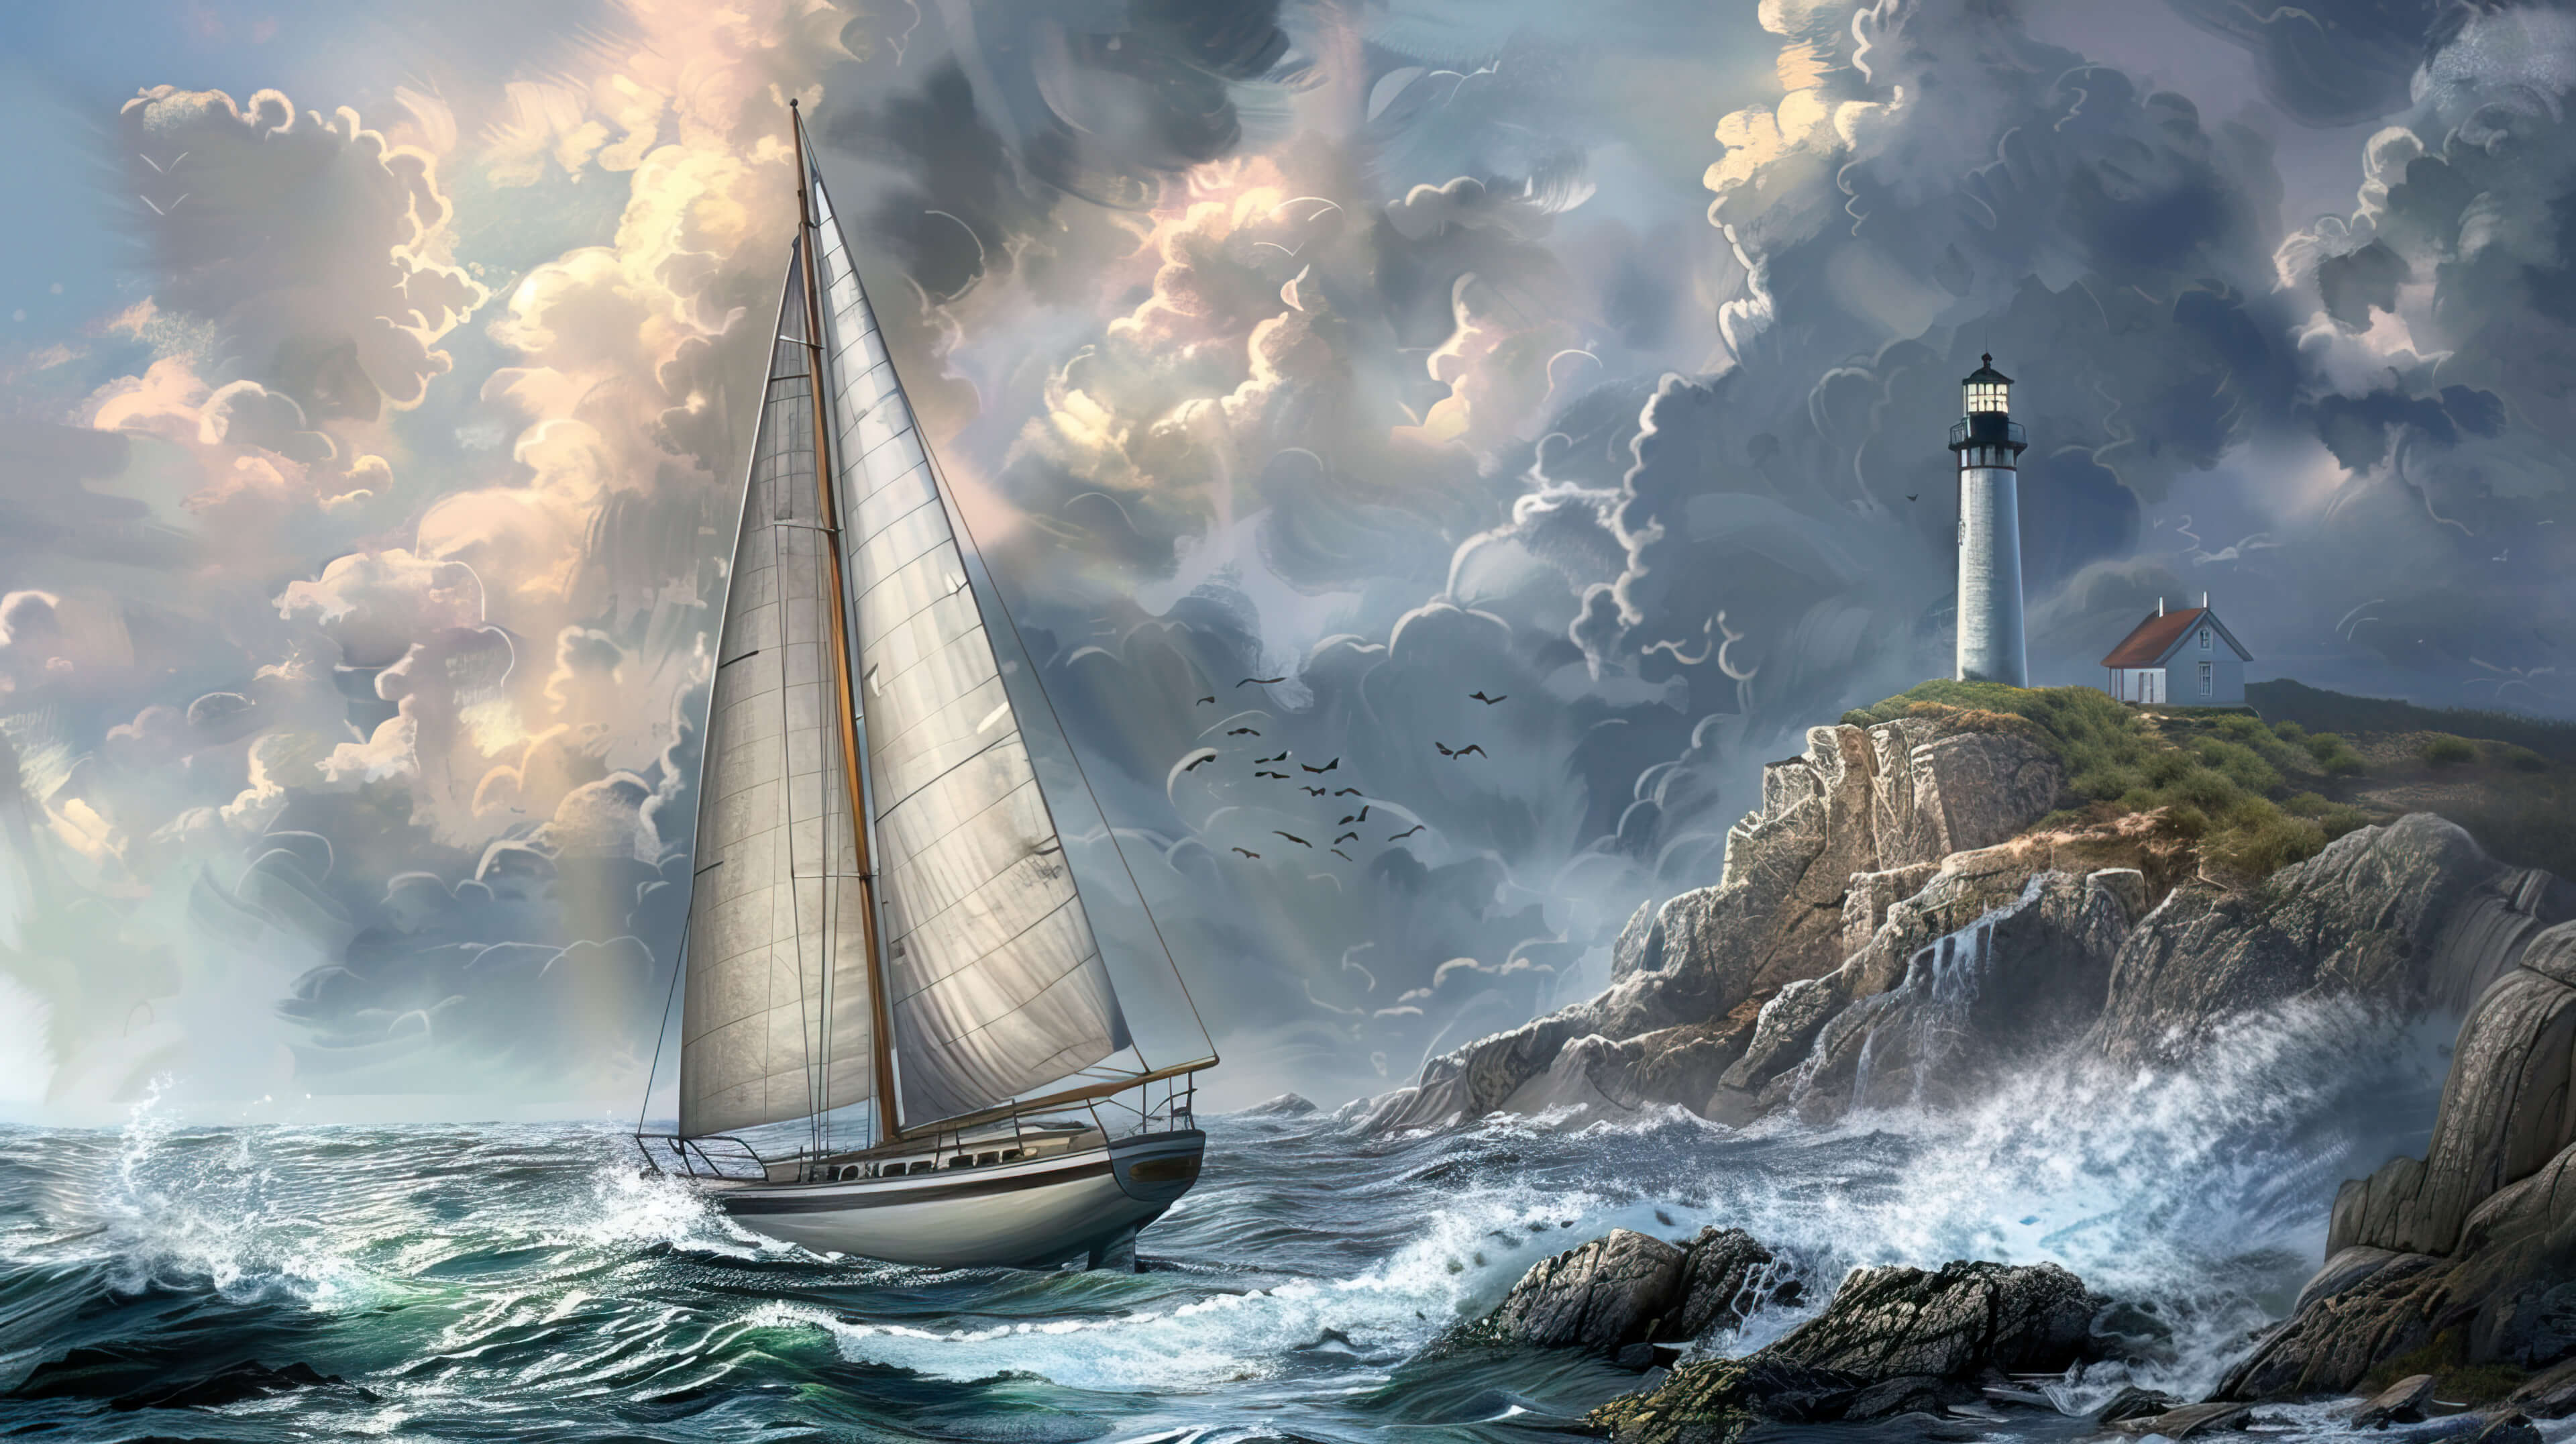 A nostalgic image of a vintage sailboat gliding past a lighthouse on a rocky coastline, evoking a sense of maritime history and romance